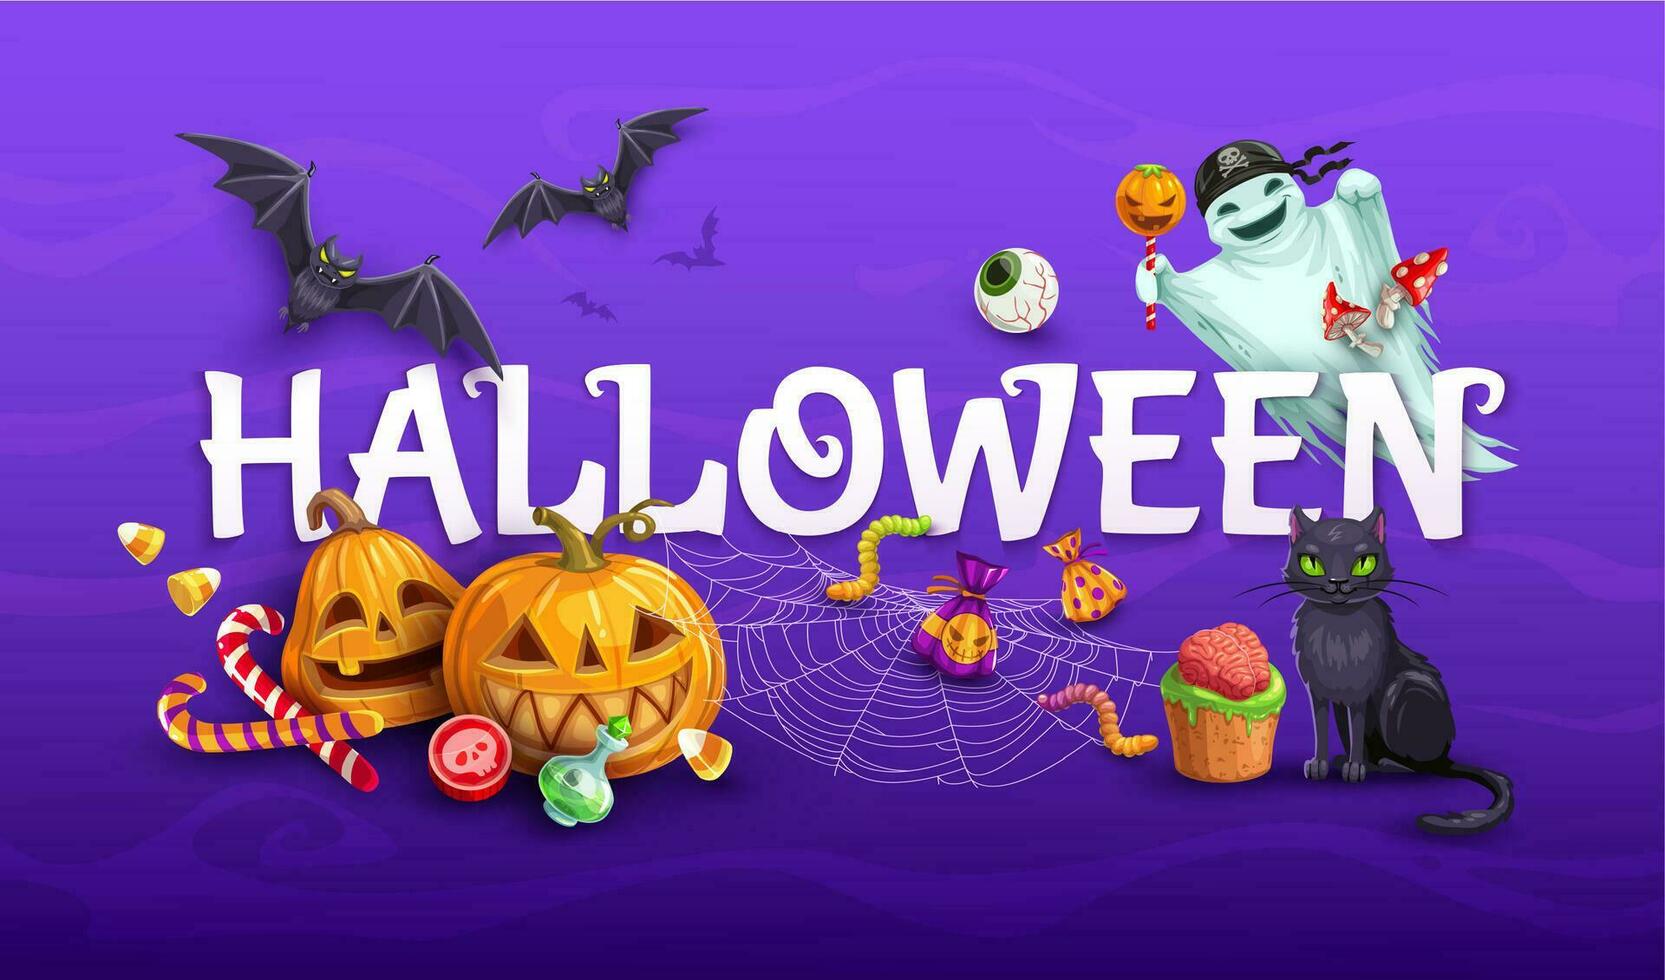 Halloween Banner mit Karikatur Figuren, Süßigkeiten vektor